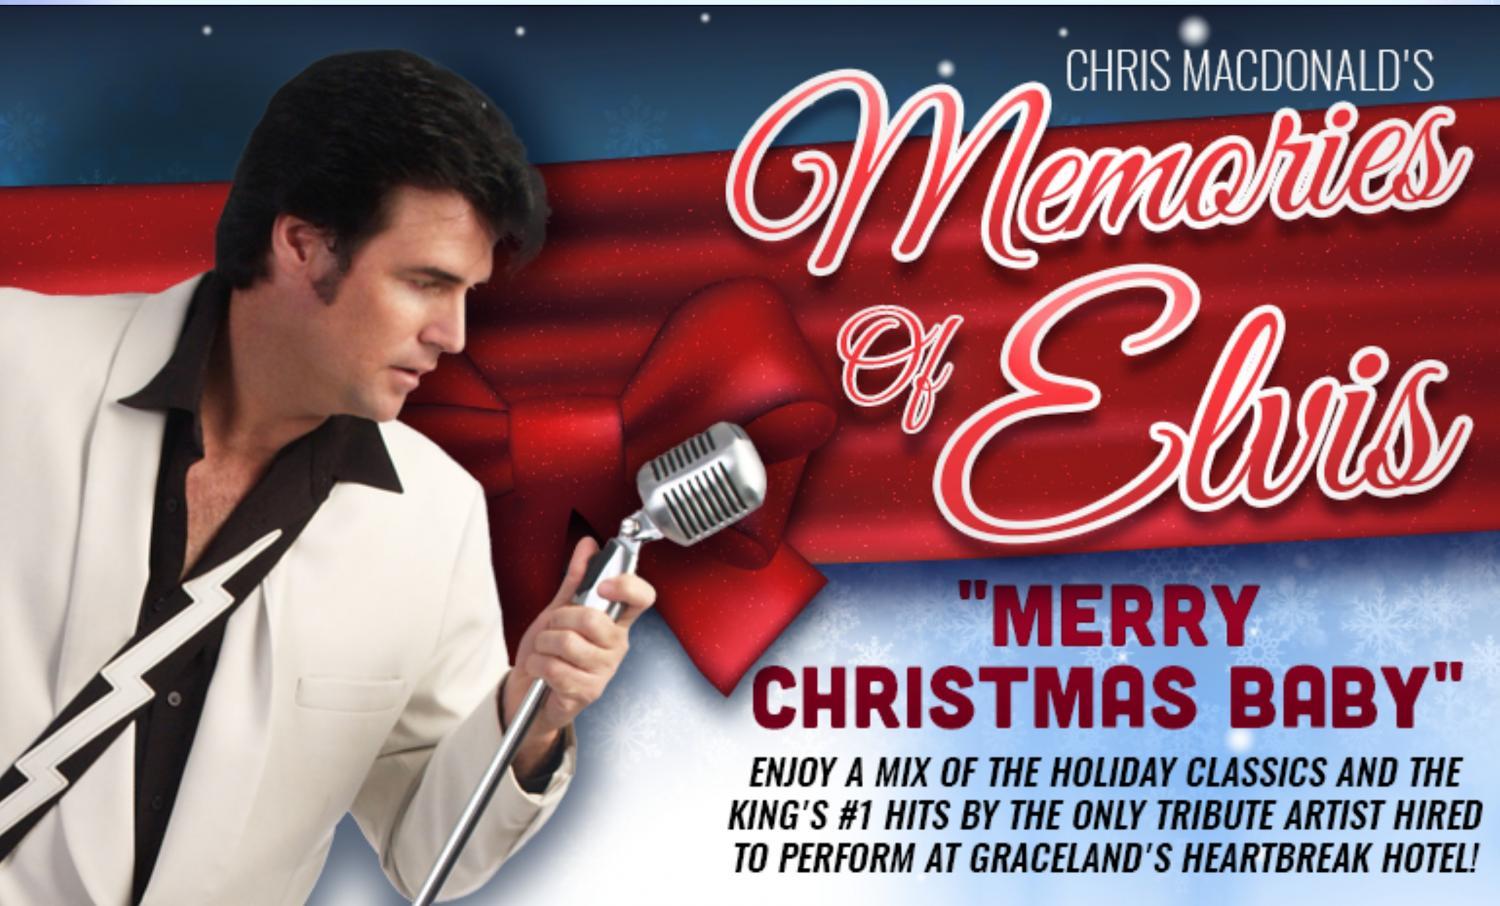 Chris MacDonald's Memories of Elvis
Fri Dec 16, 6:00 PM - Fri Dec 16, 10:00 PM
in 57 days